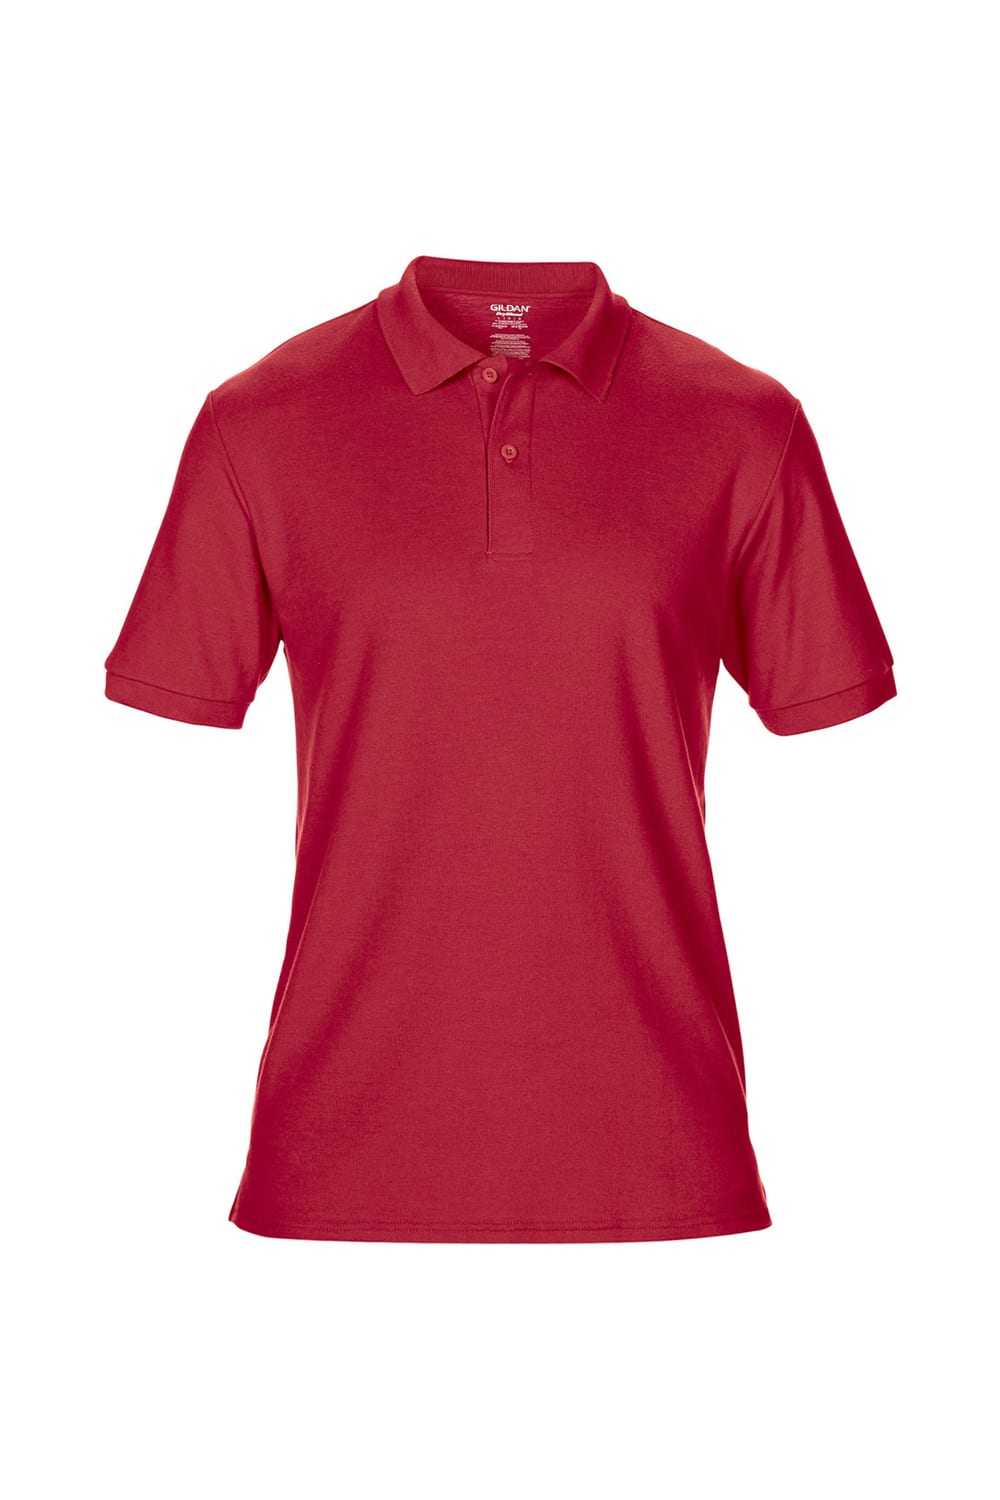 Gildan Mens DryBlend Adult Sport Double Pique Polo Shirt (Red)